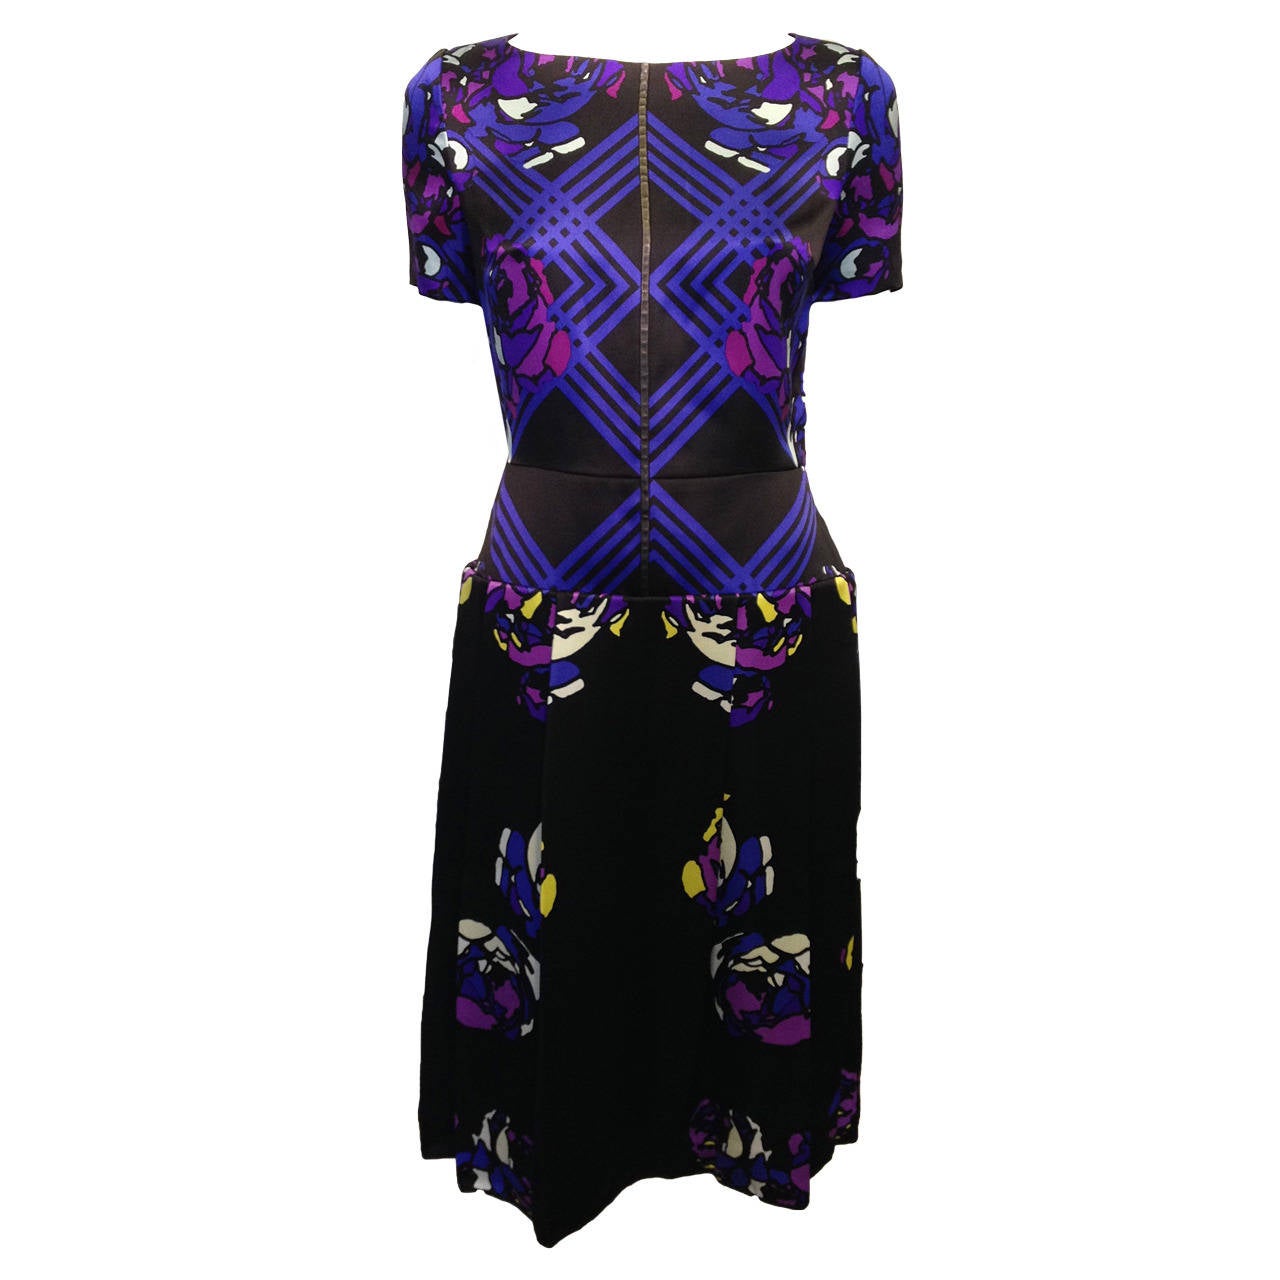 Honor Black and Purple Floral Geometric Dress